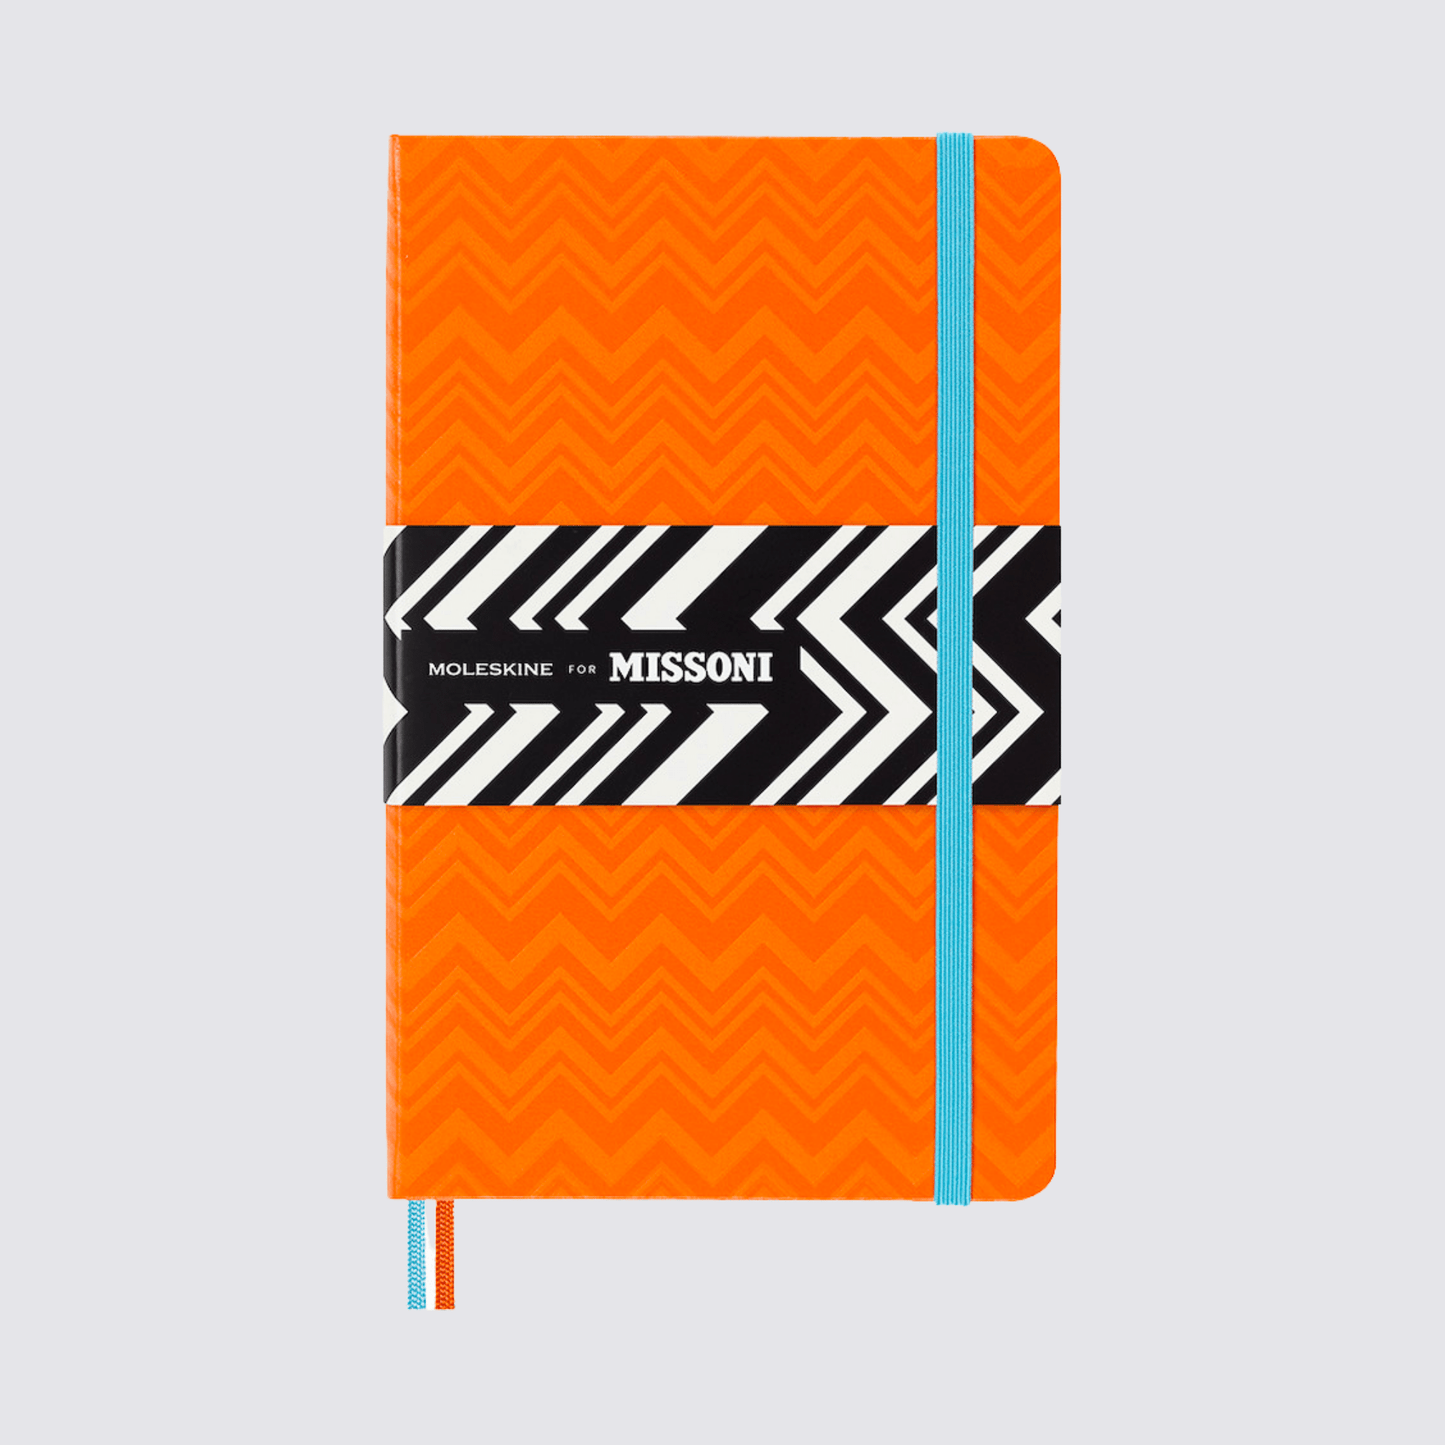 Hard Cover Ruled Notebook Orange